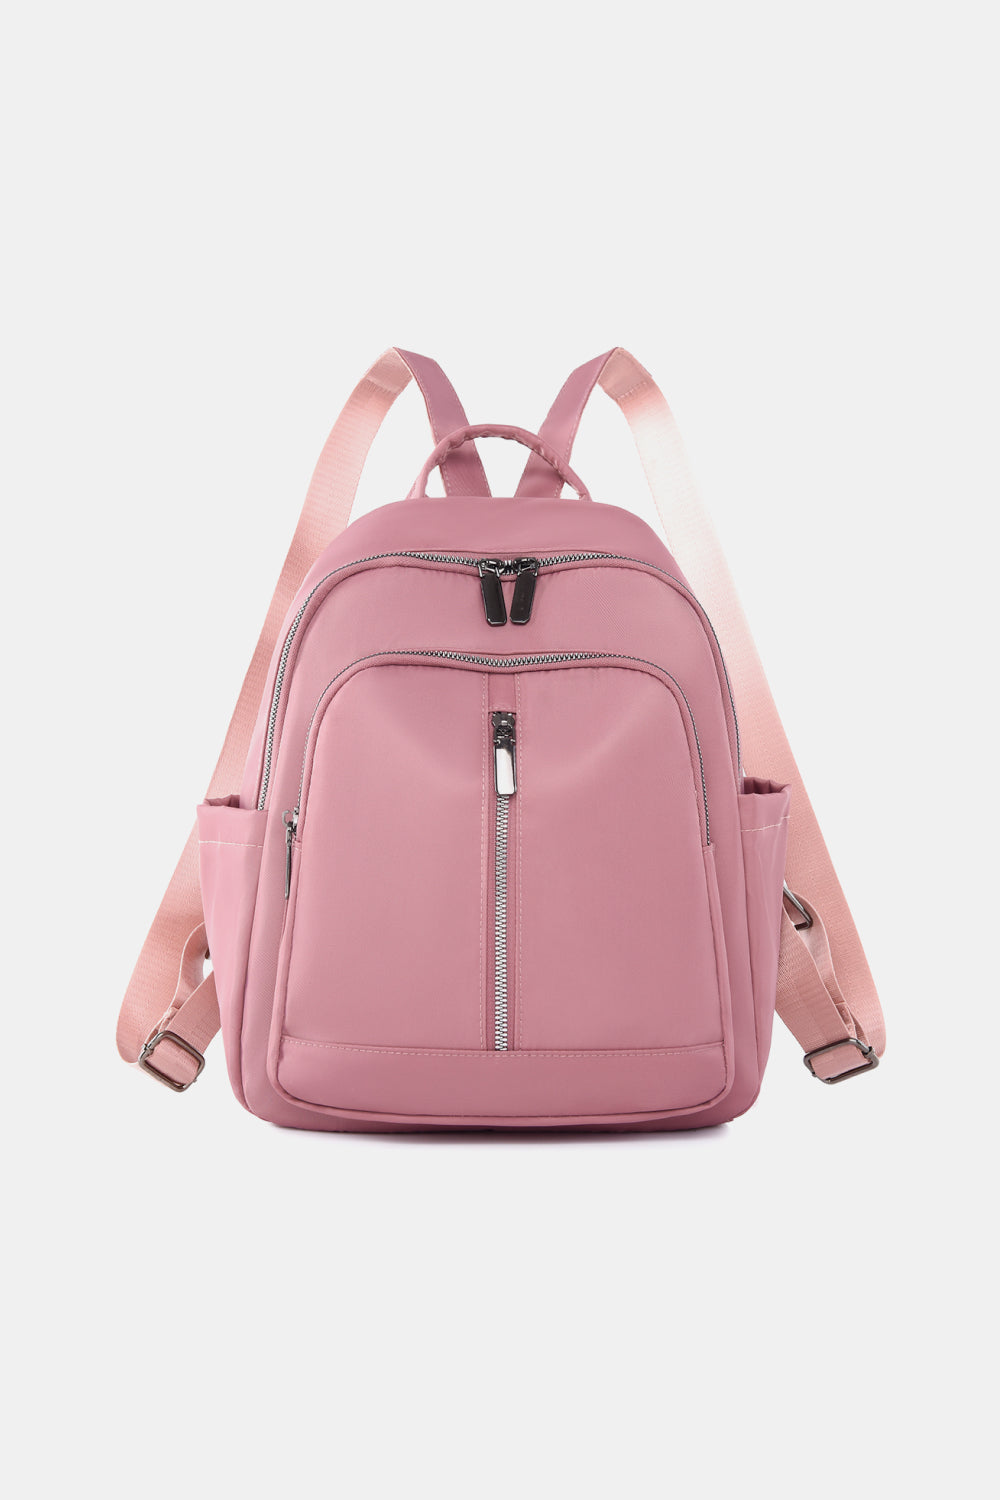 Dune London Backpack 5 L Backpack Pink - Price in India | Flipkart.com